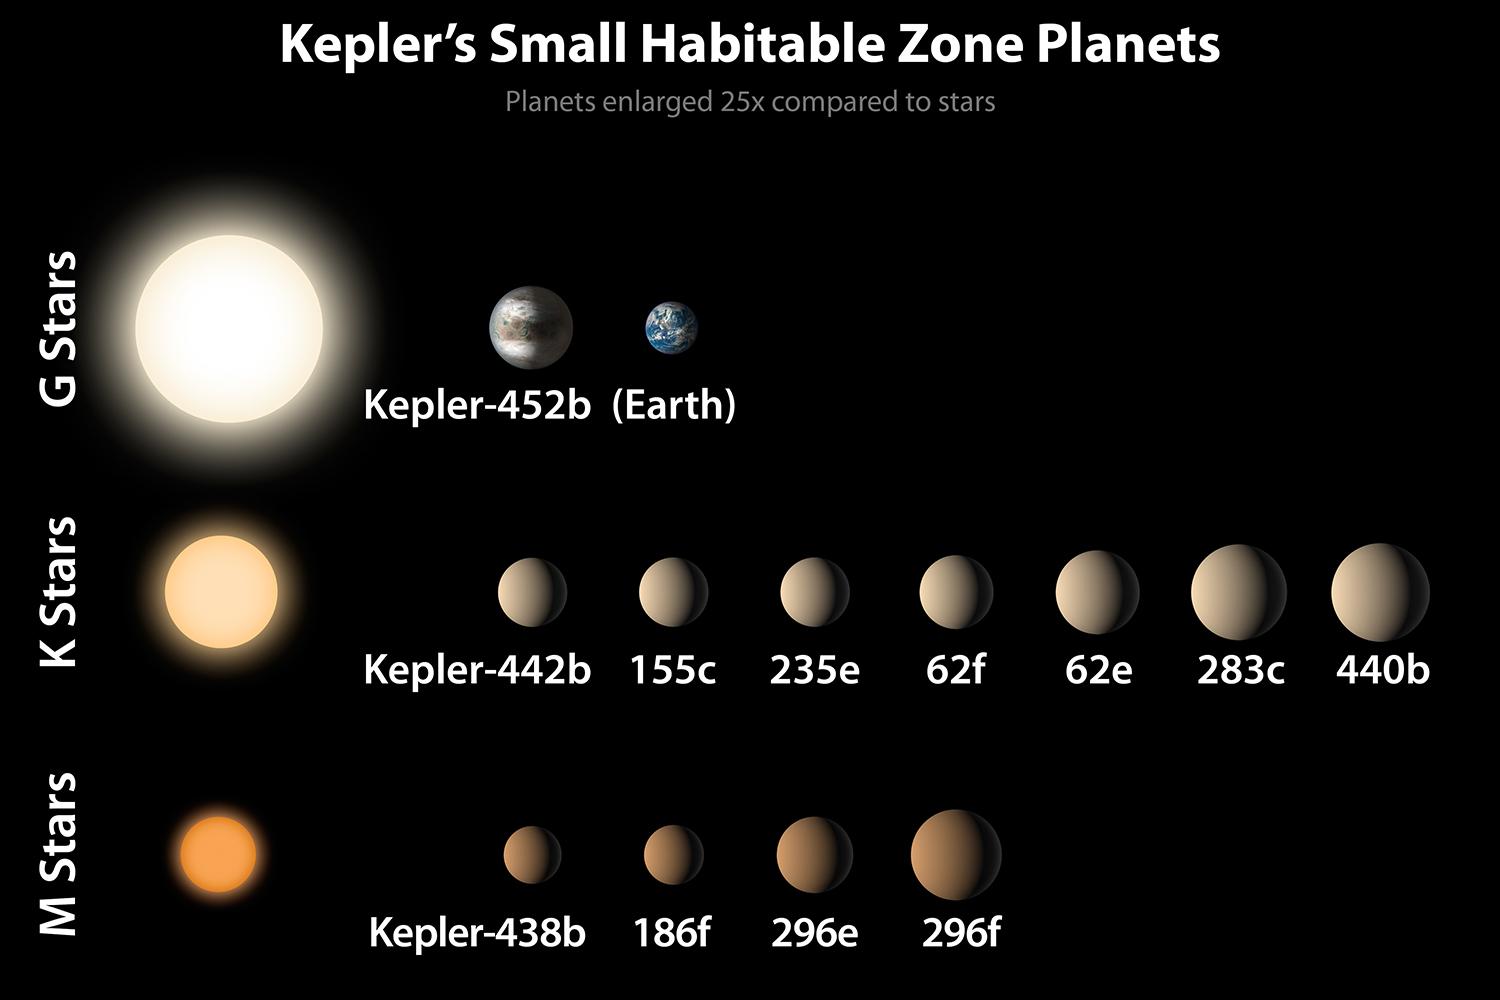 nasa announces kepler 452b exoplanet discovery keplersmallhzplanets